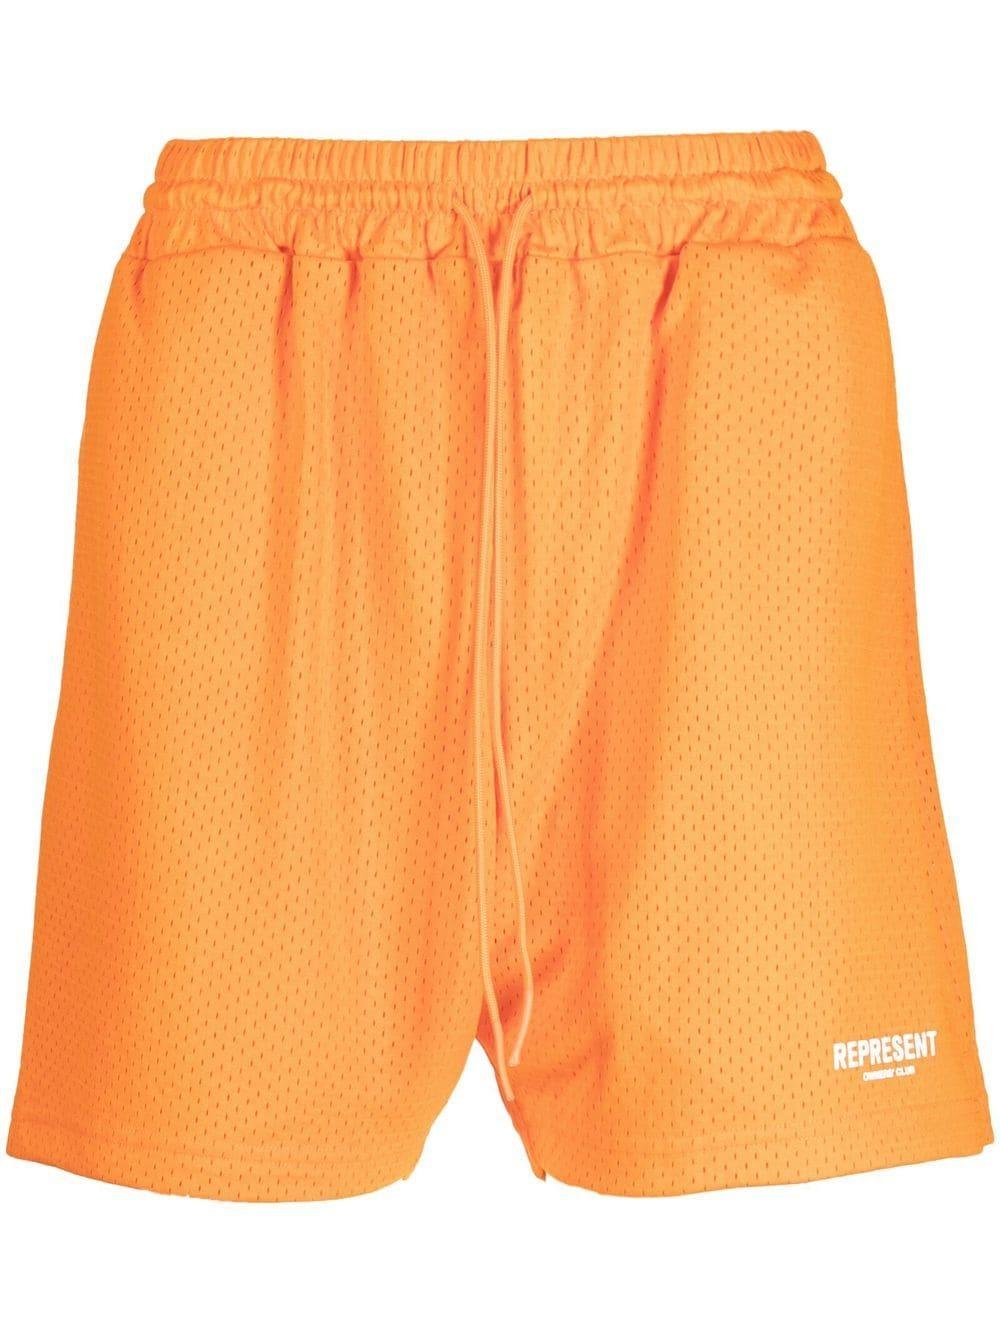 Represent Owners Club Mesh Shorts Neon Orange for Men | Lyst